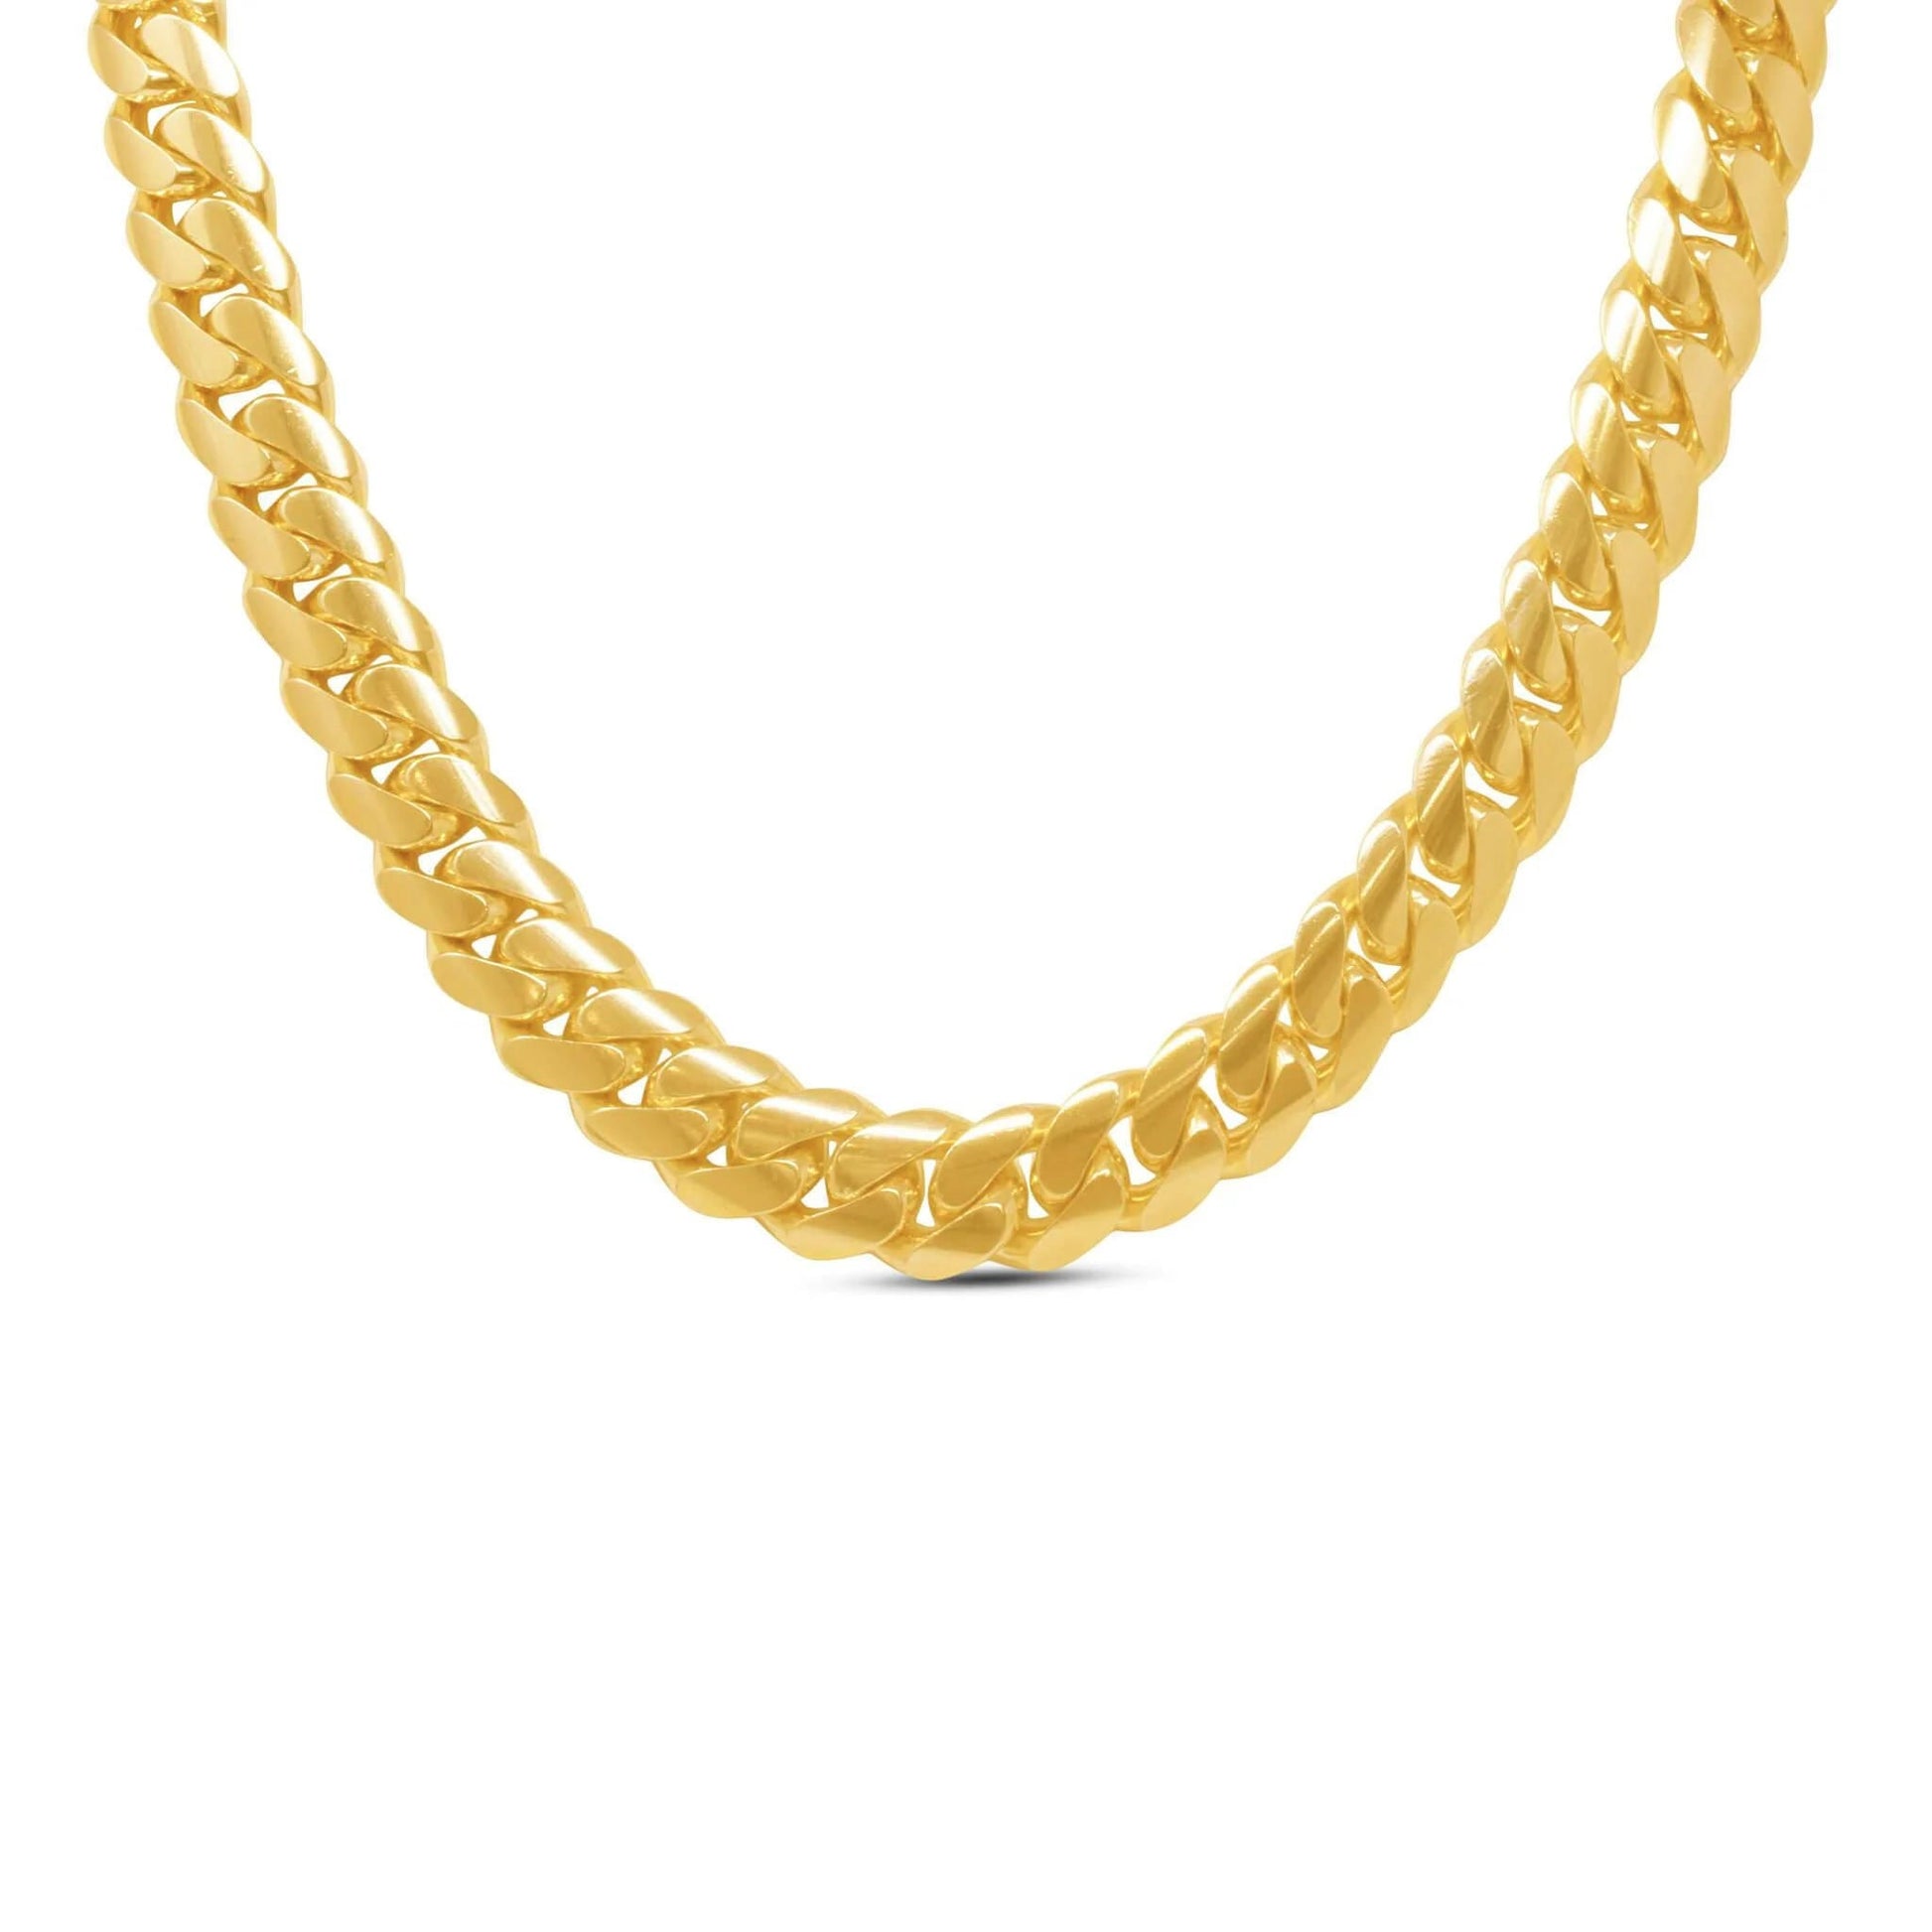 11mm Miami Cuban Link Chain in 10K Solid Yellow Gold - Vera Jewelry in Miami